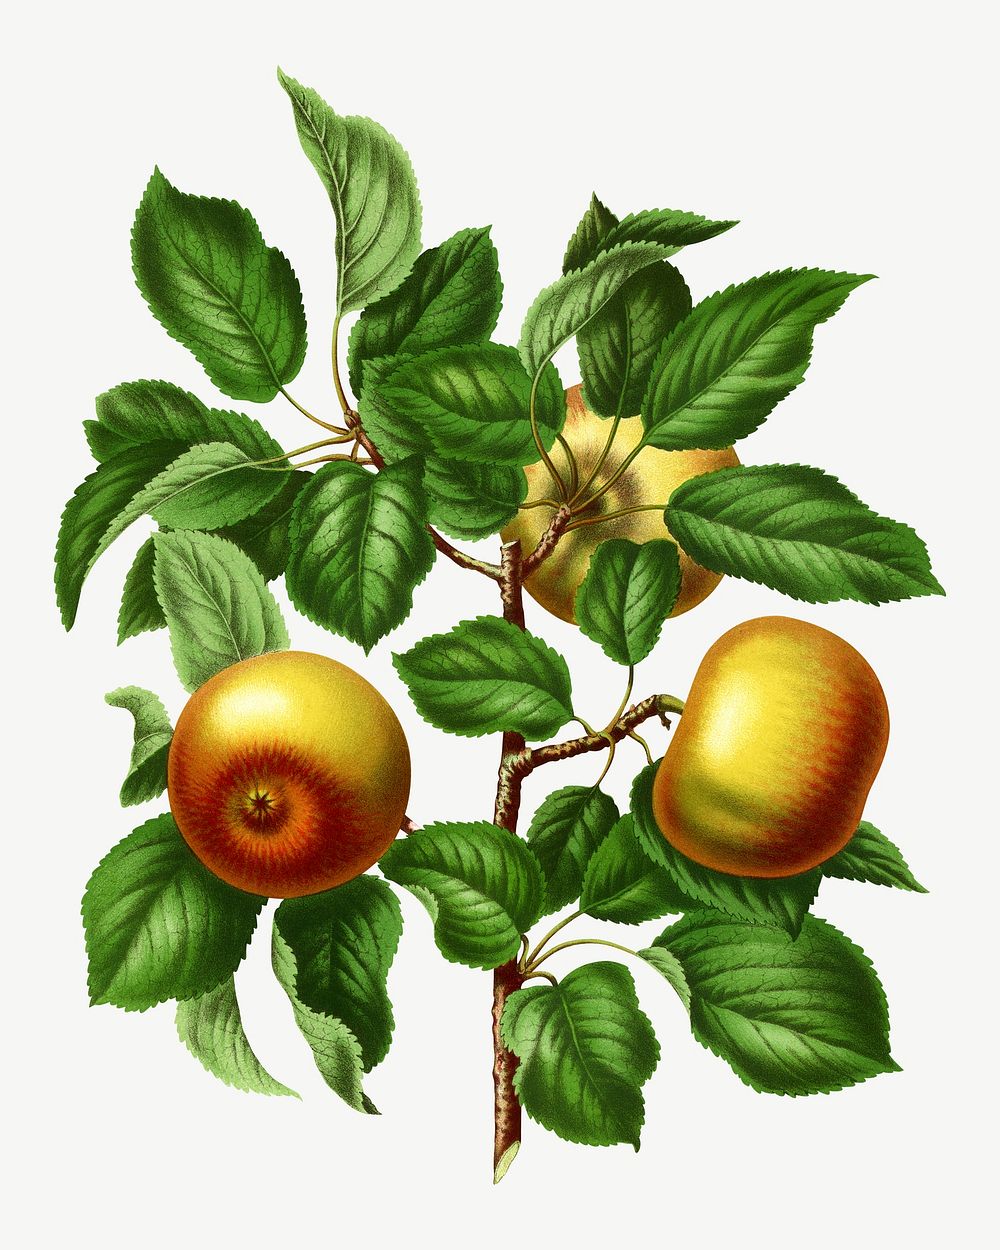 Vintage apples illustration, collage element psd. Remixed from our own original 1879 edition of Nederlandsche Flora en…